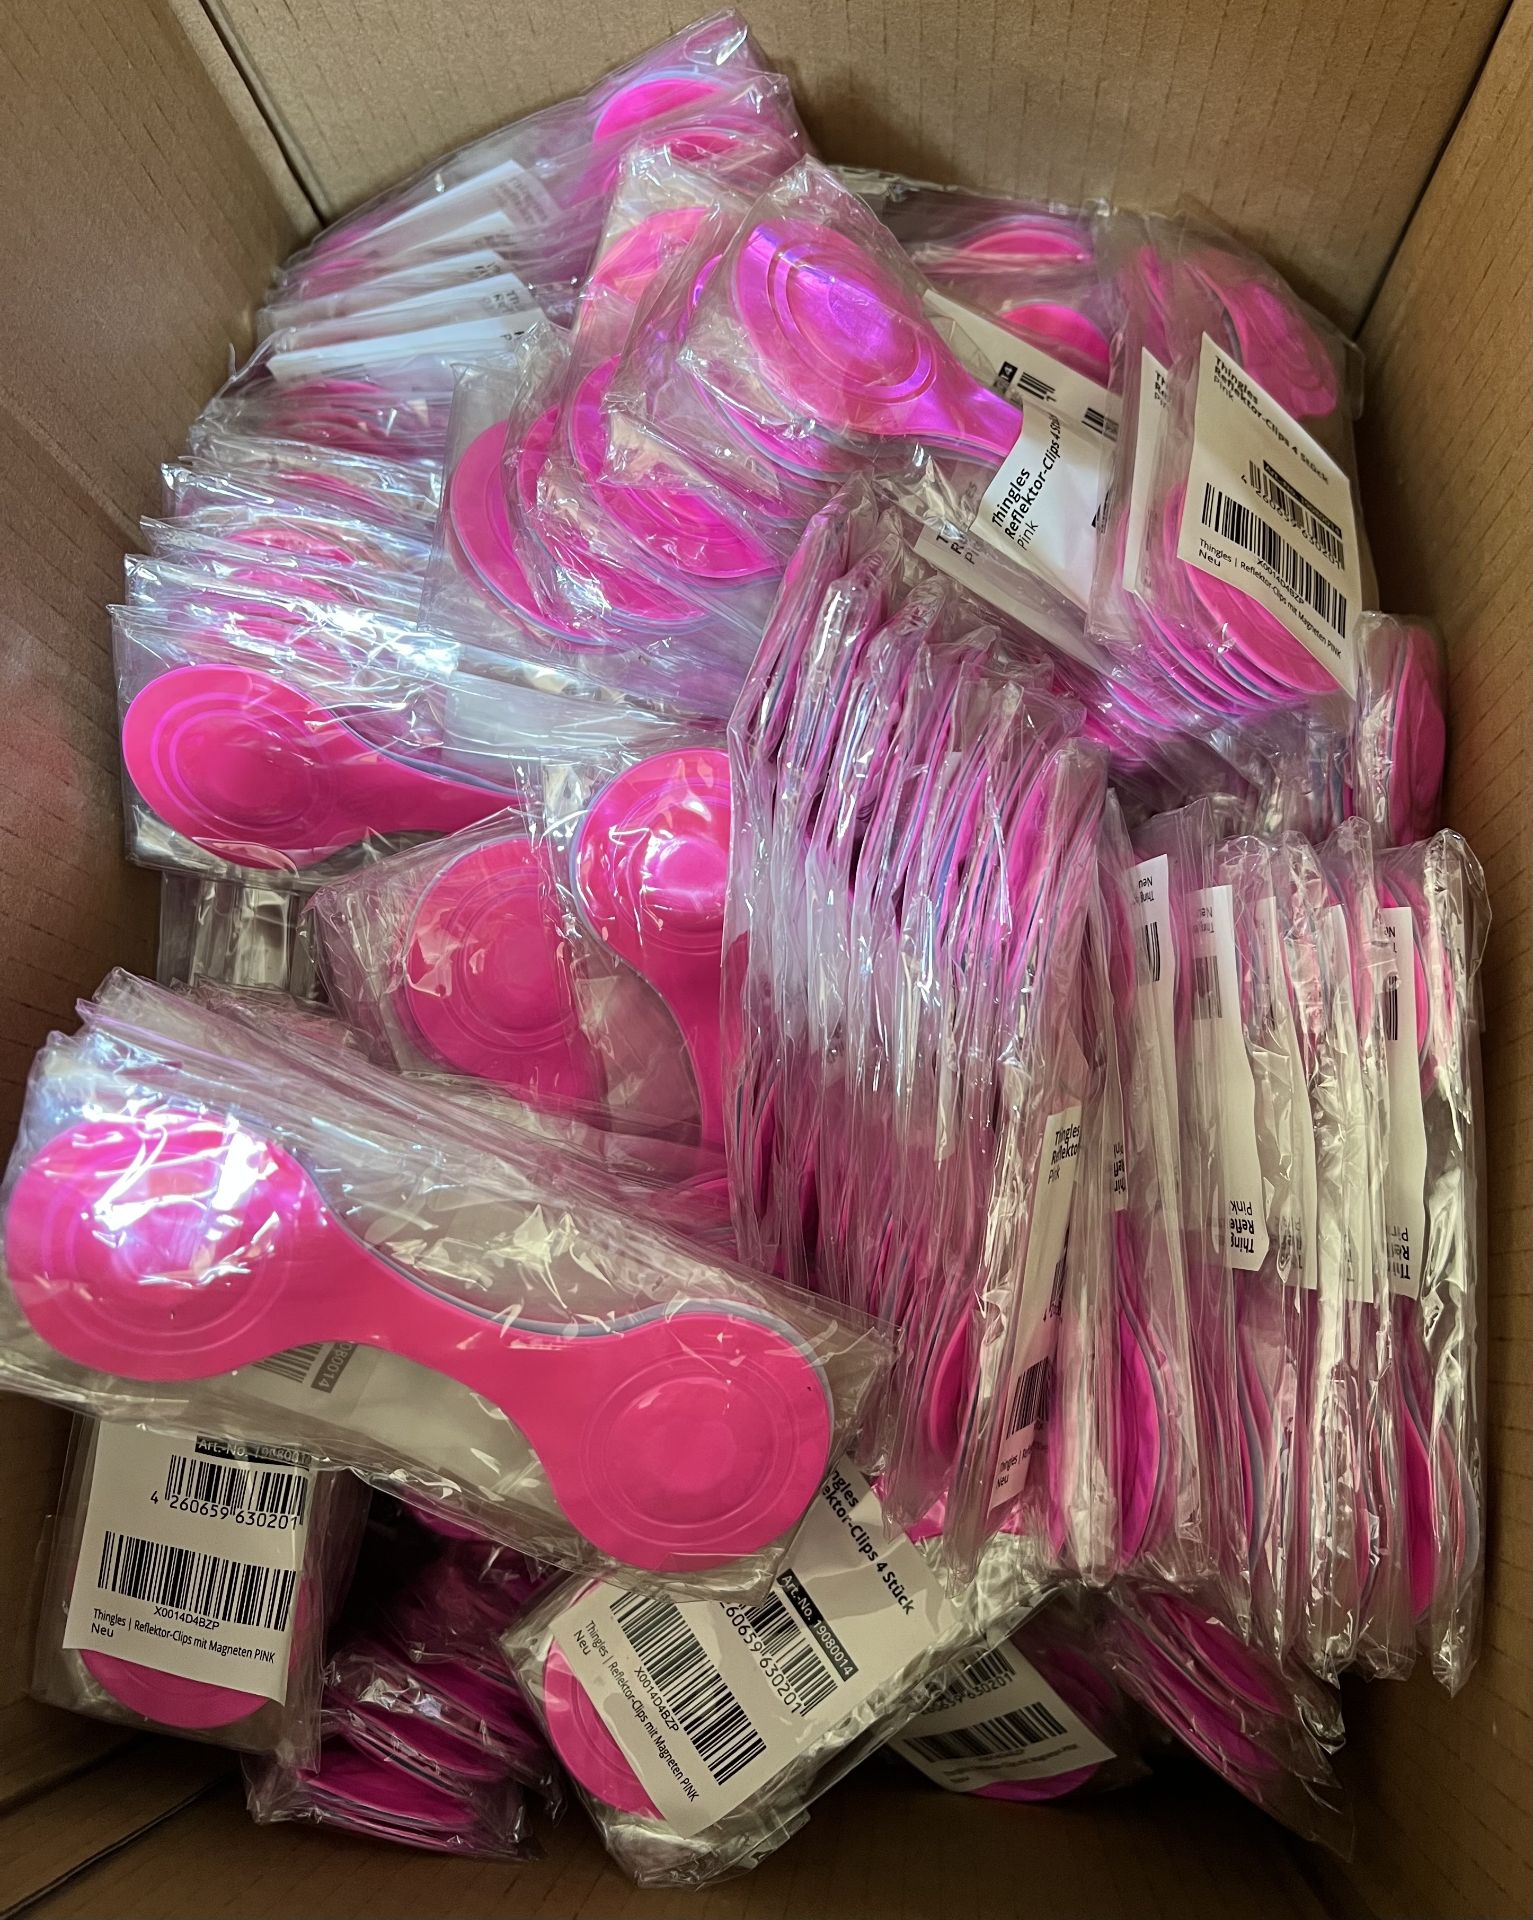 25 x Thingles Pink 4 Pack of Magnetic Reflectors for Children, School Bag, Bike etc - RRP £199.75!